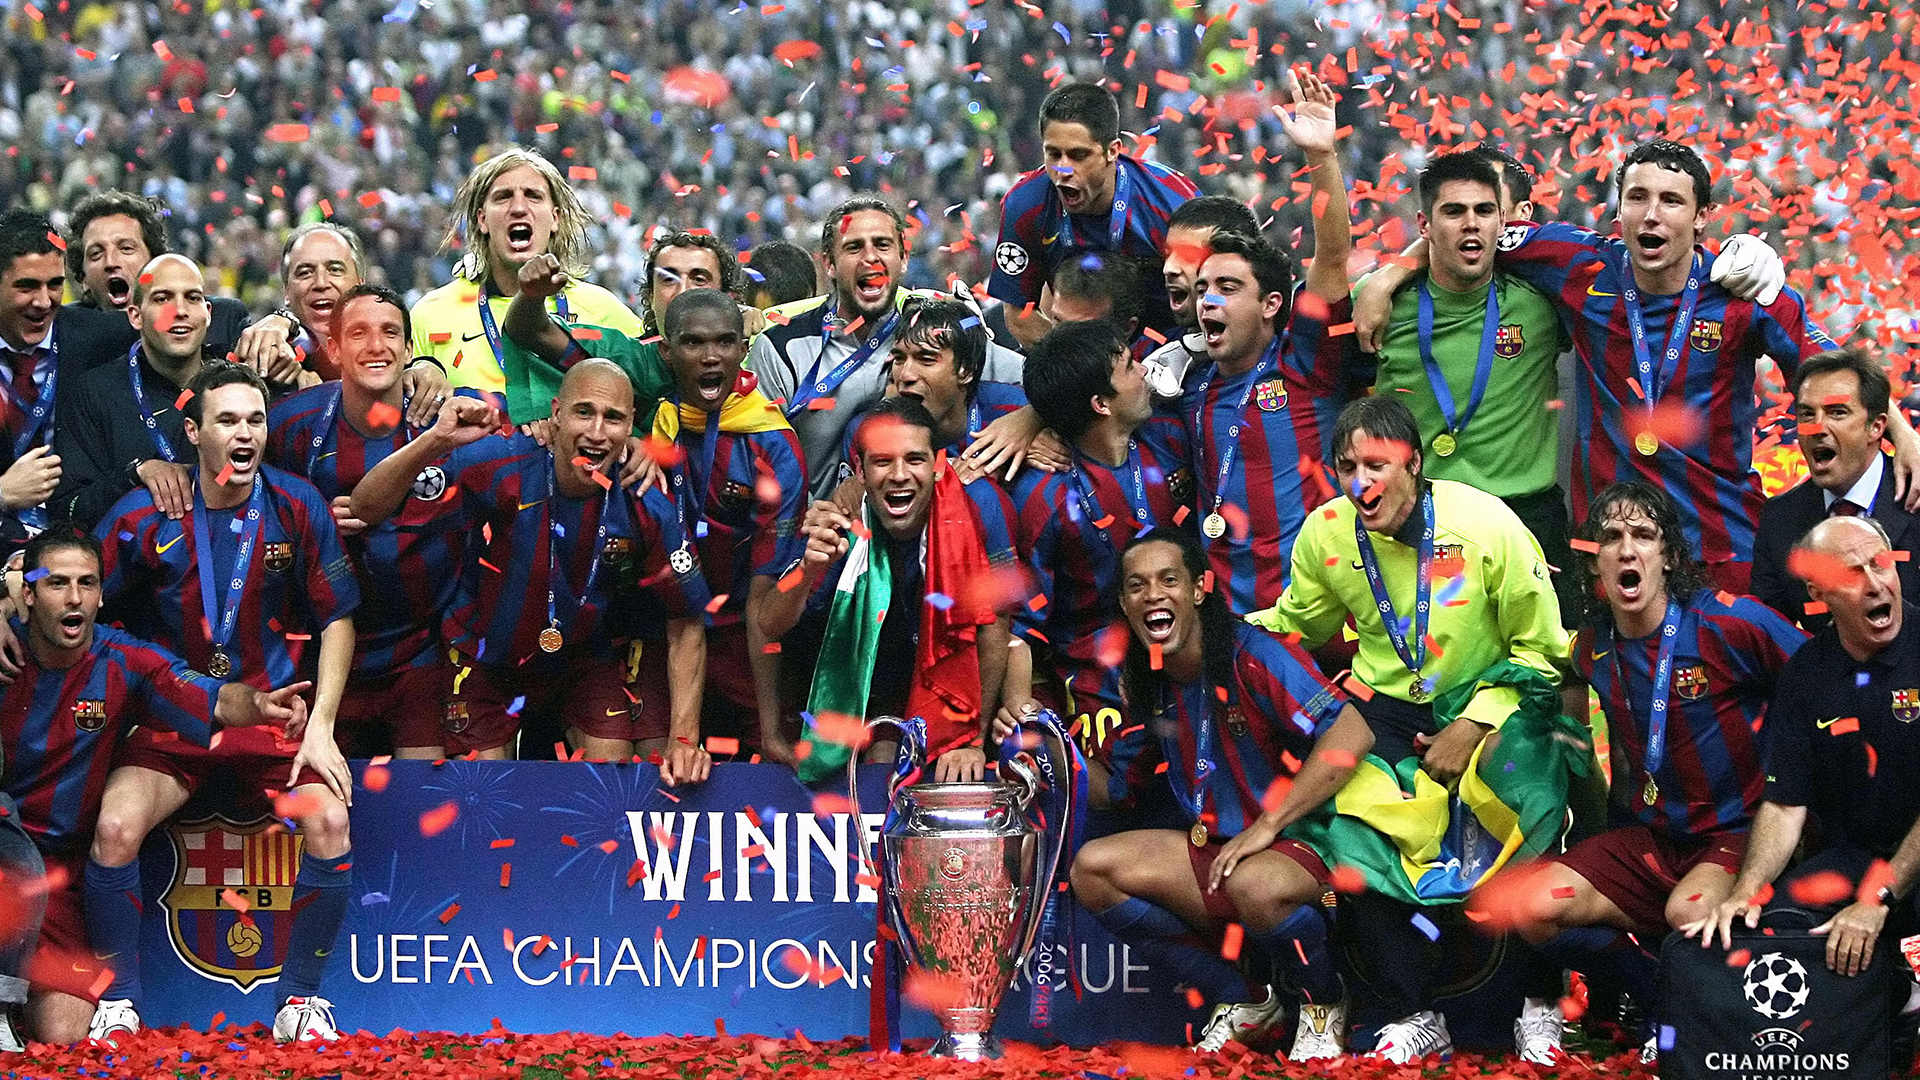 Barcelona 2006 Champions League winners